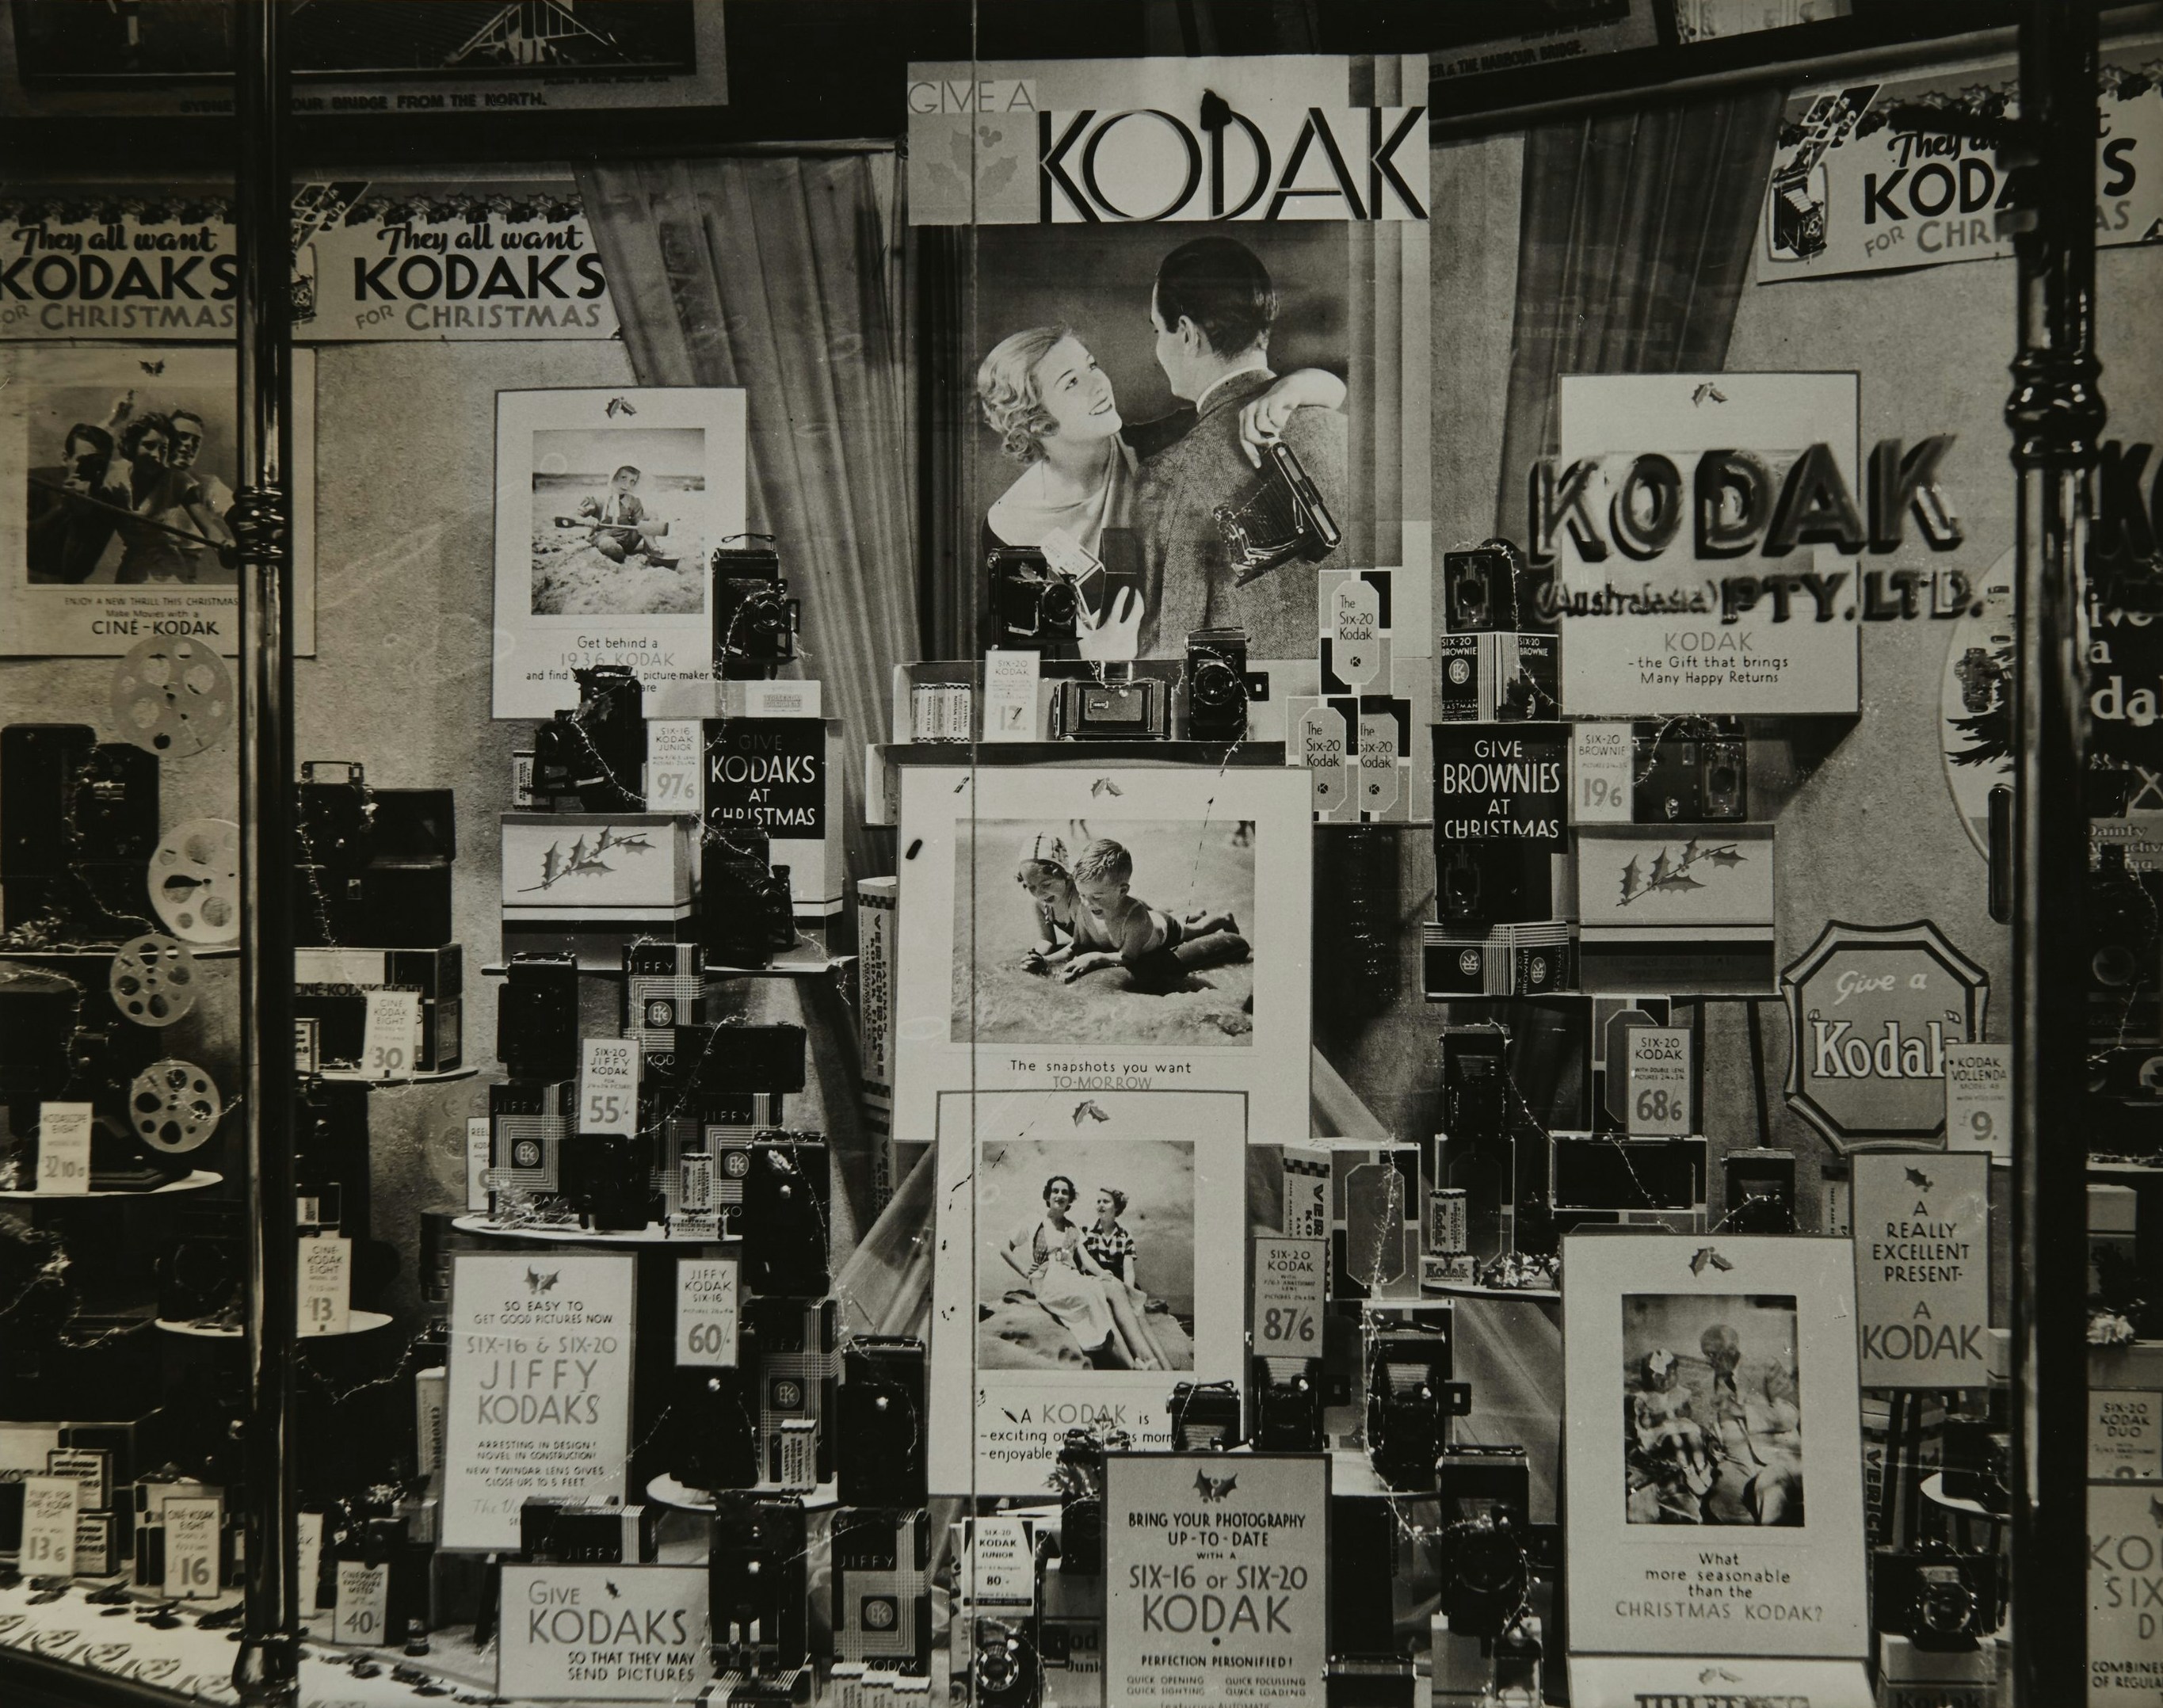 Kodak, Shopfront Display, 'Give a Kodak'